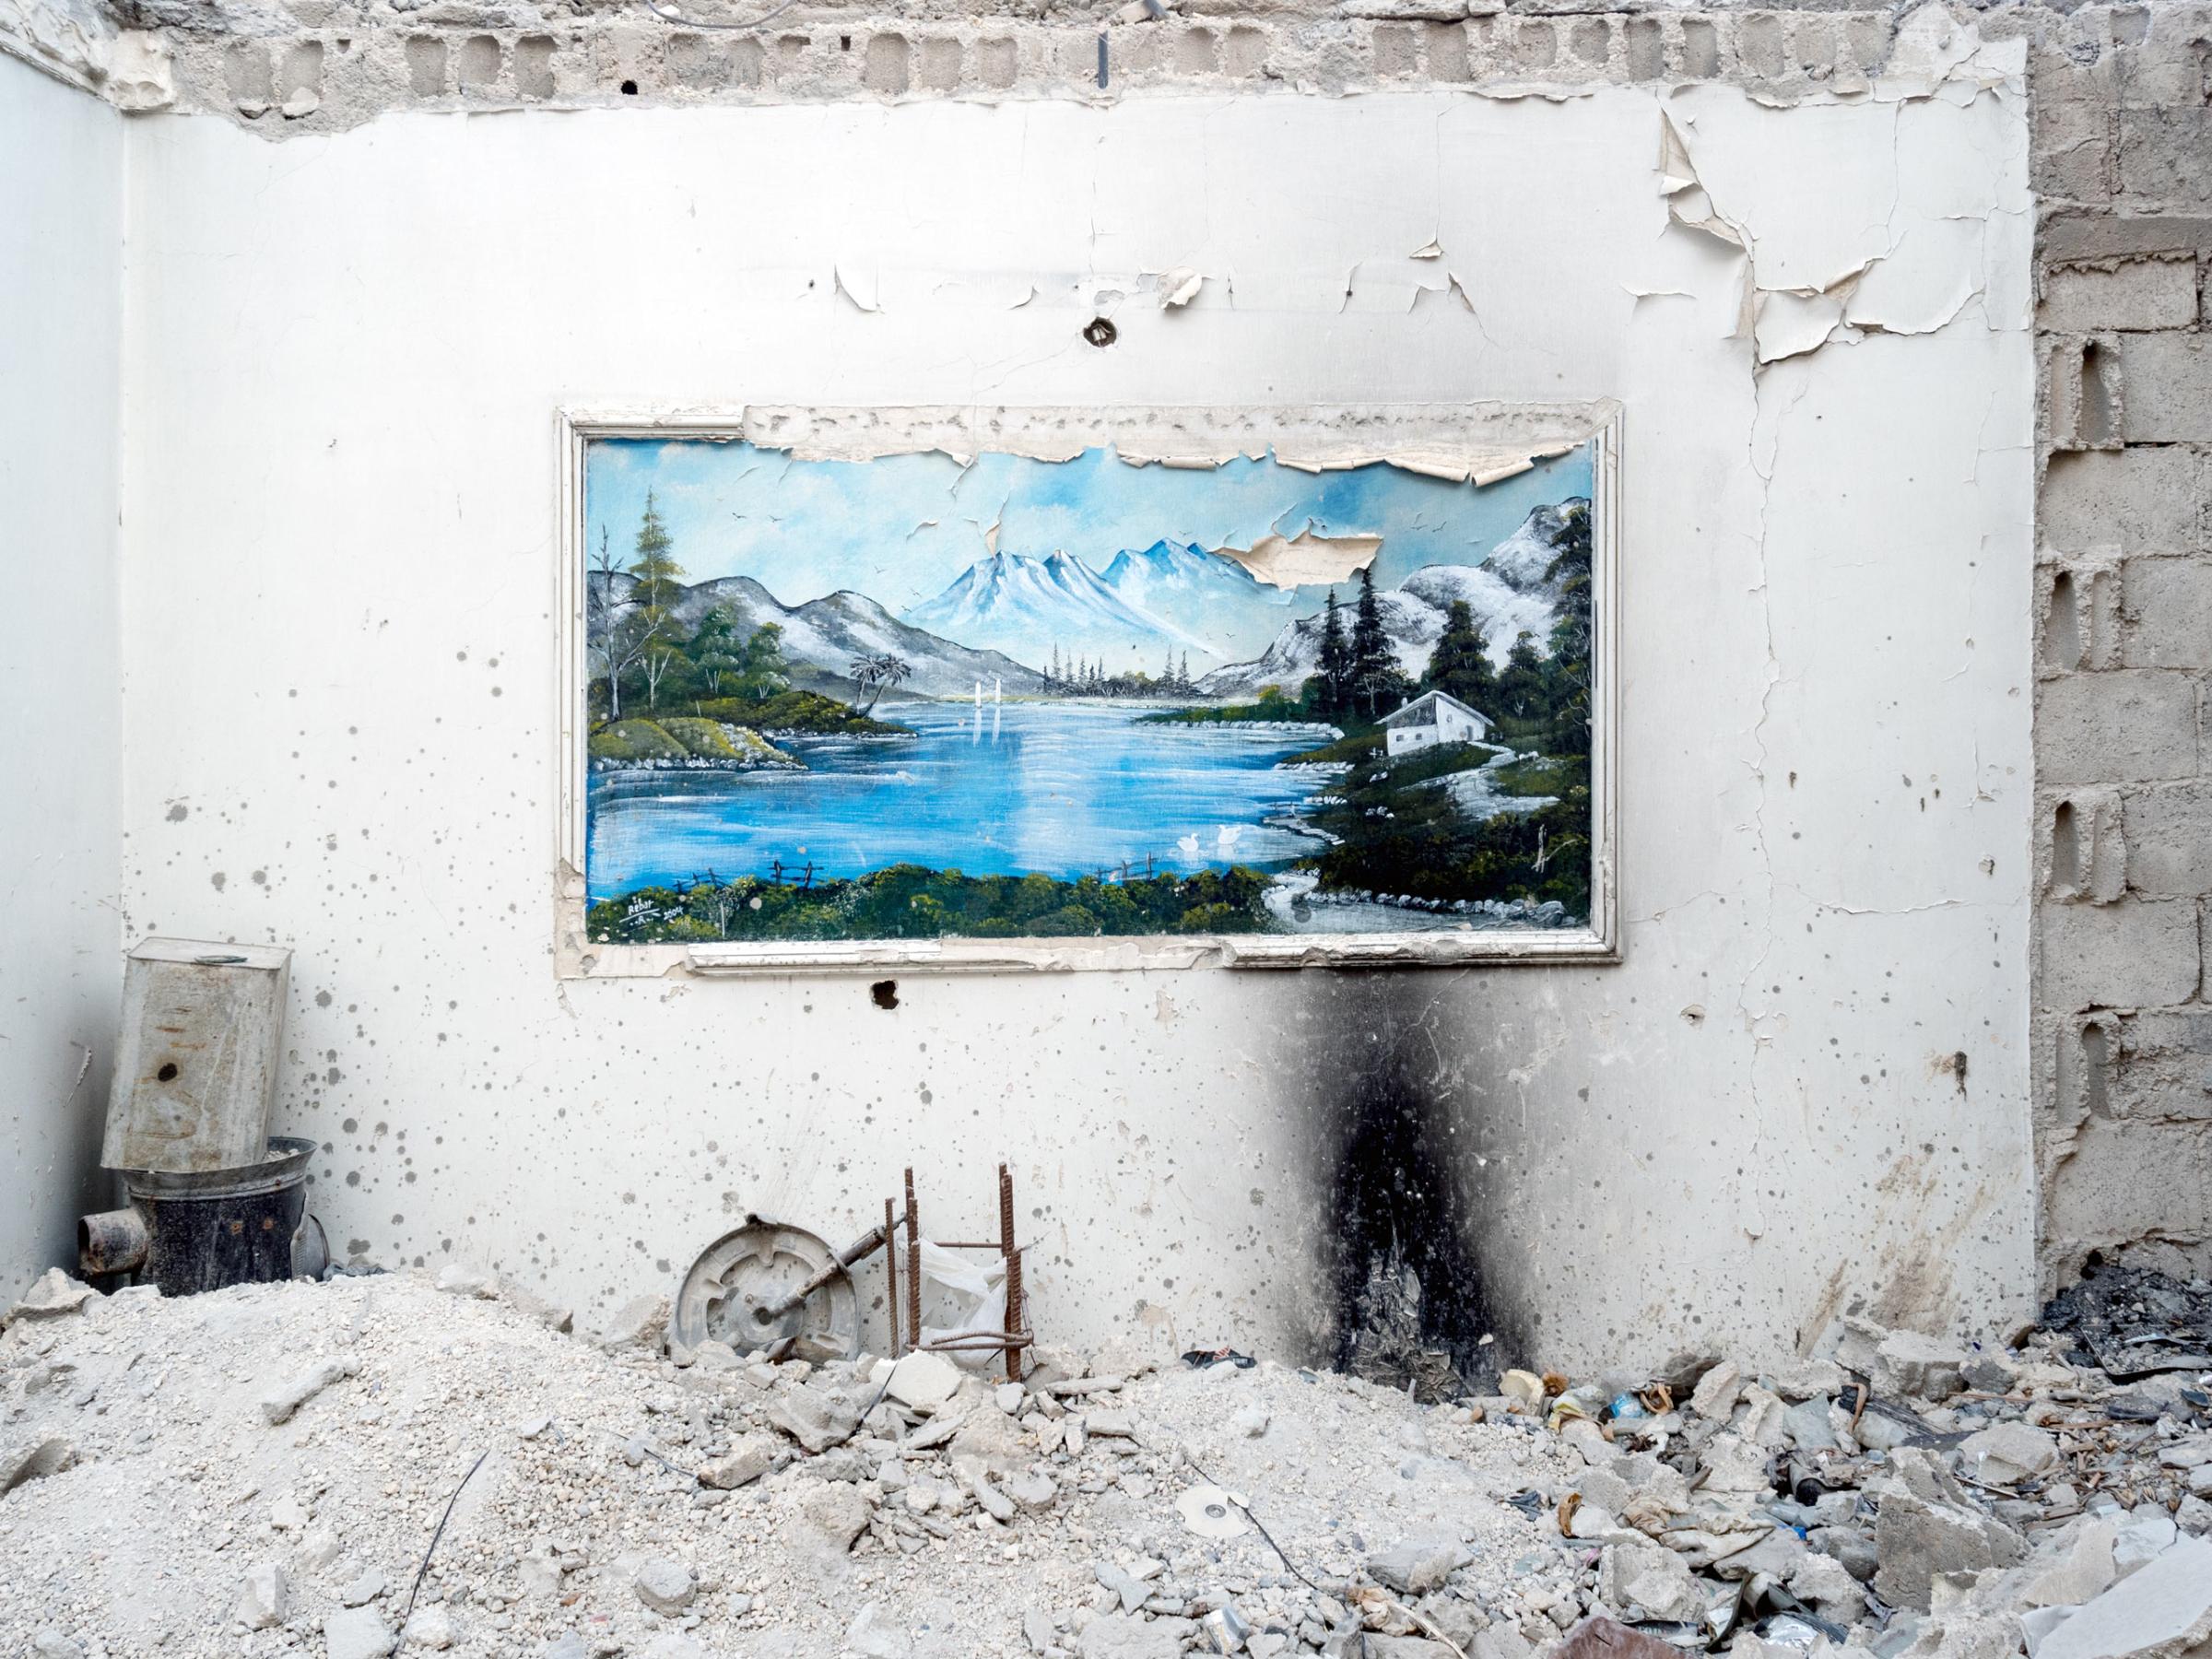 SYRIA. Kobani / Kobane (Arabic: Ayn al Arab) . 09 August 2015. A painting is seen inside a destroyed builiding.